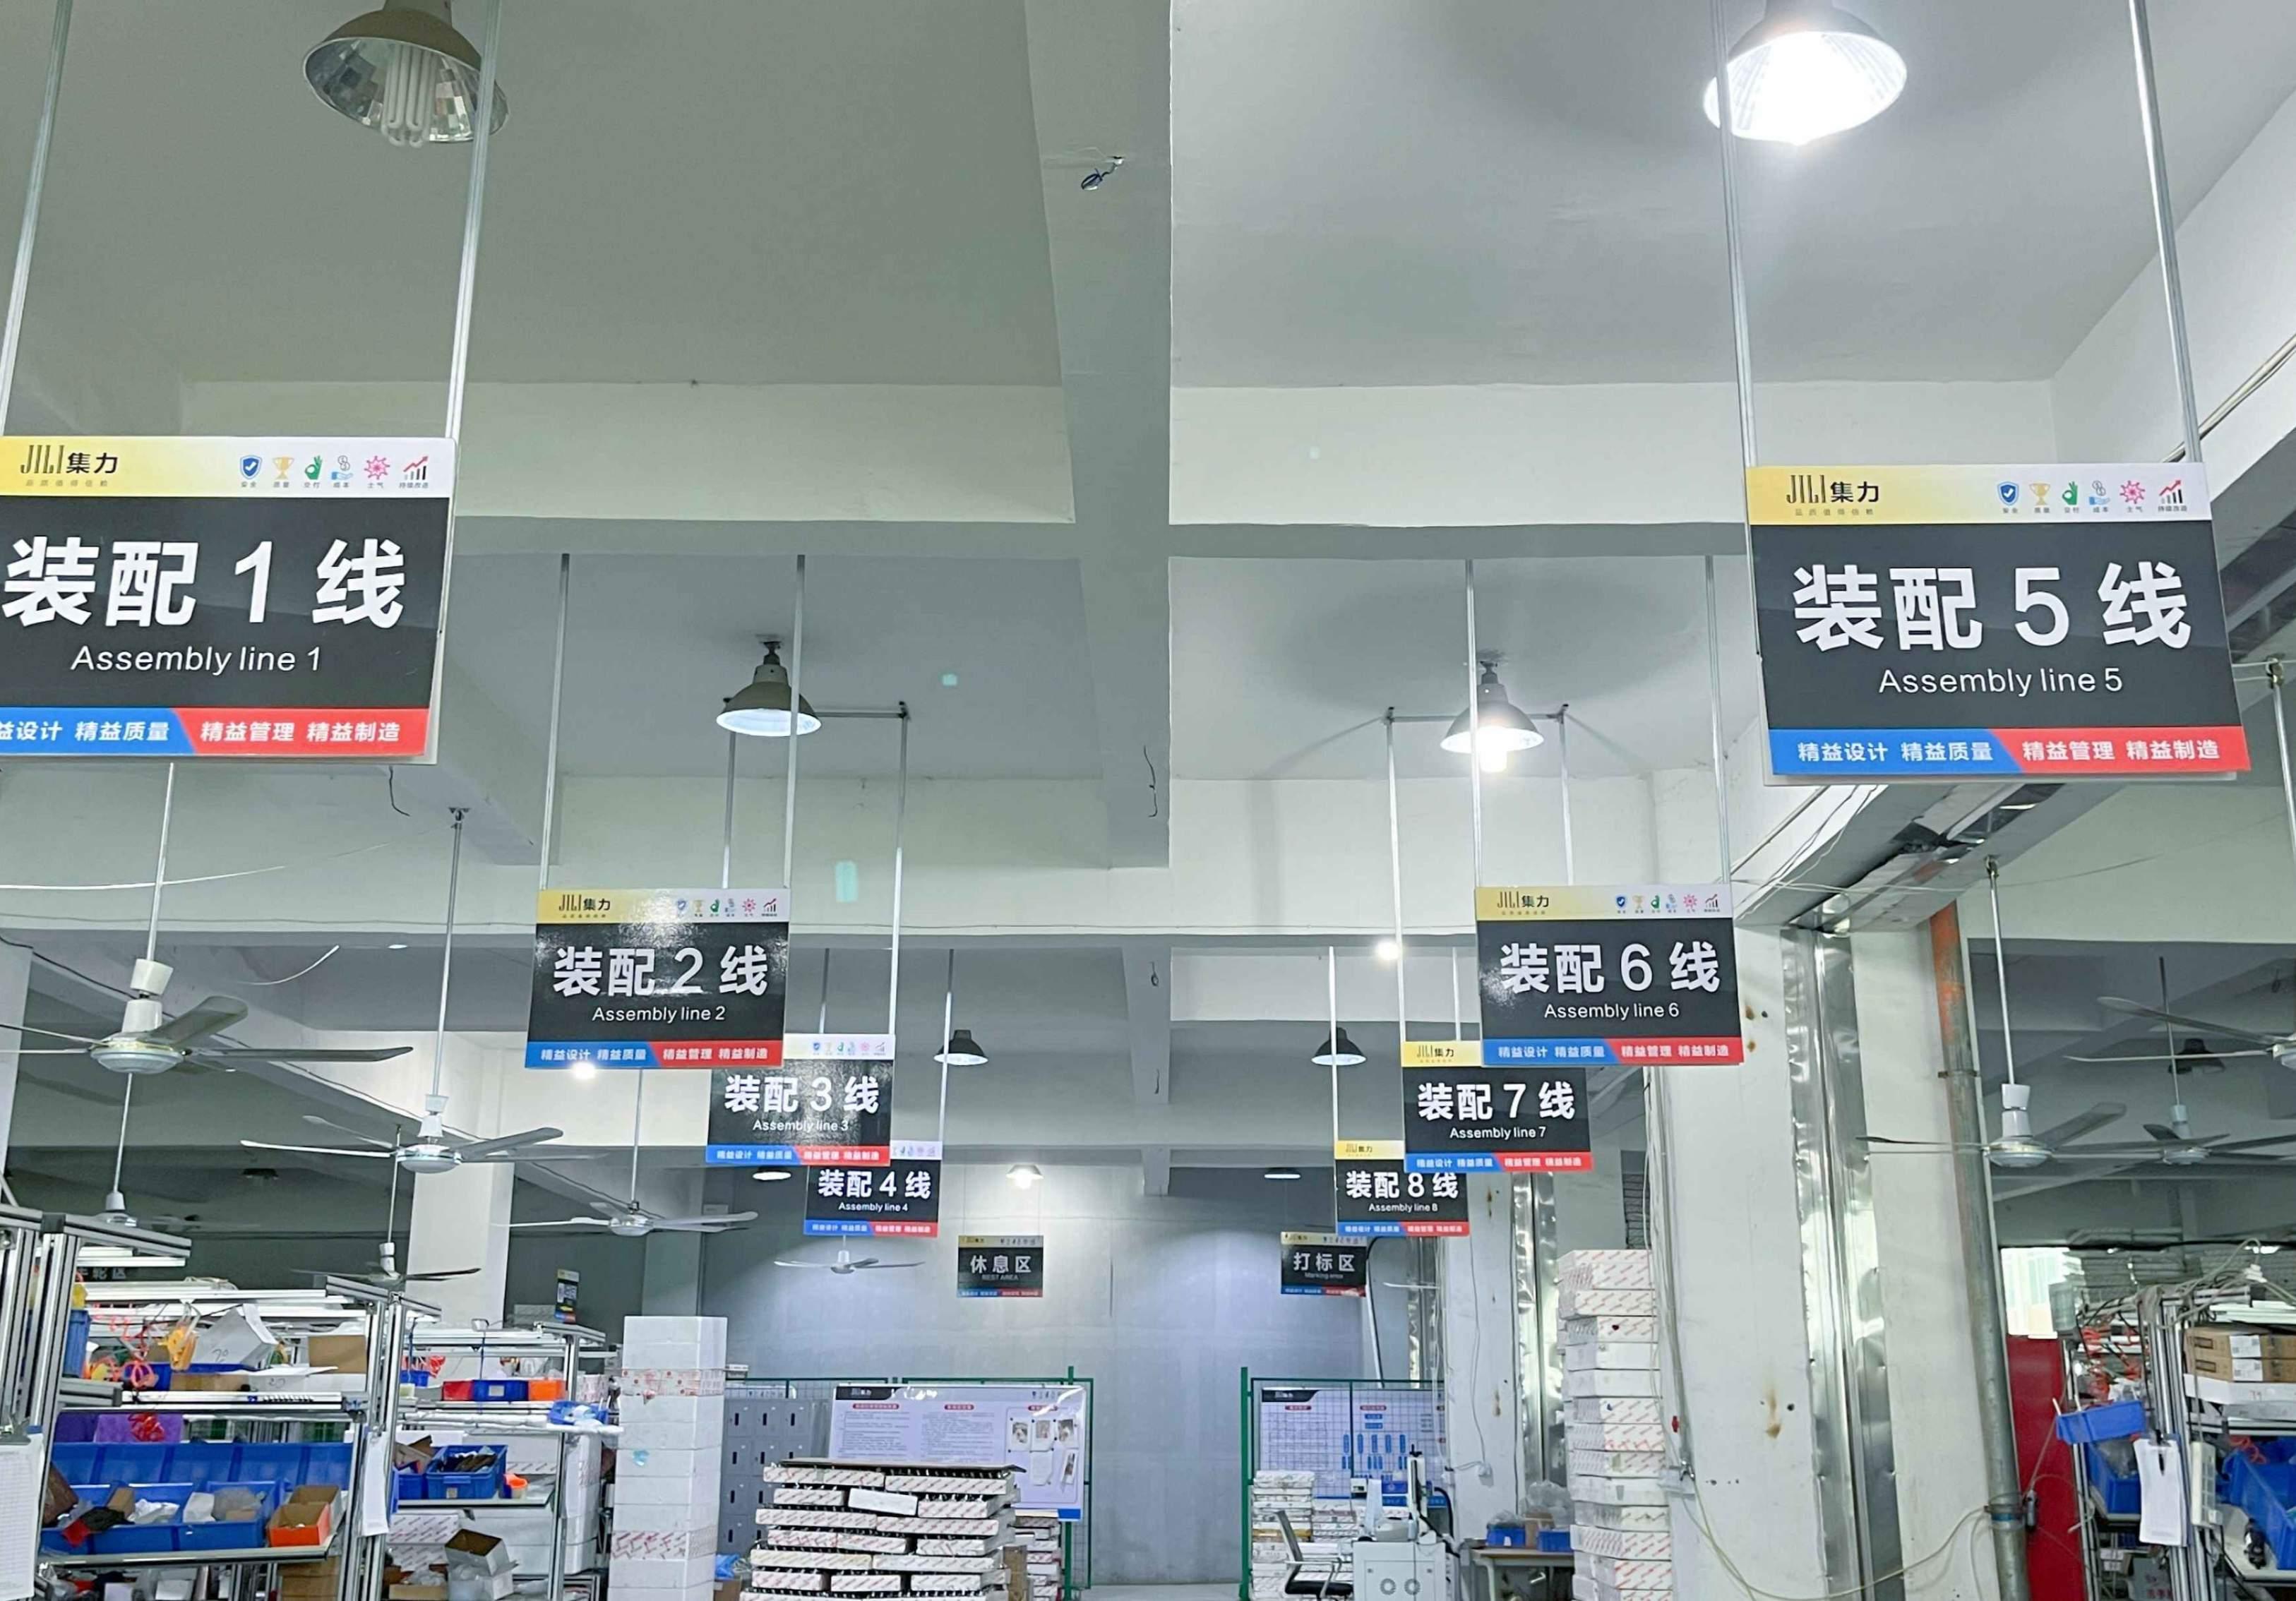 Fujian JILI Sanitary Ware Co Ltd A Leading Chinese Brand in the Bathroom Industry